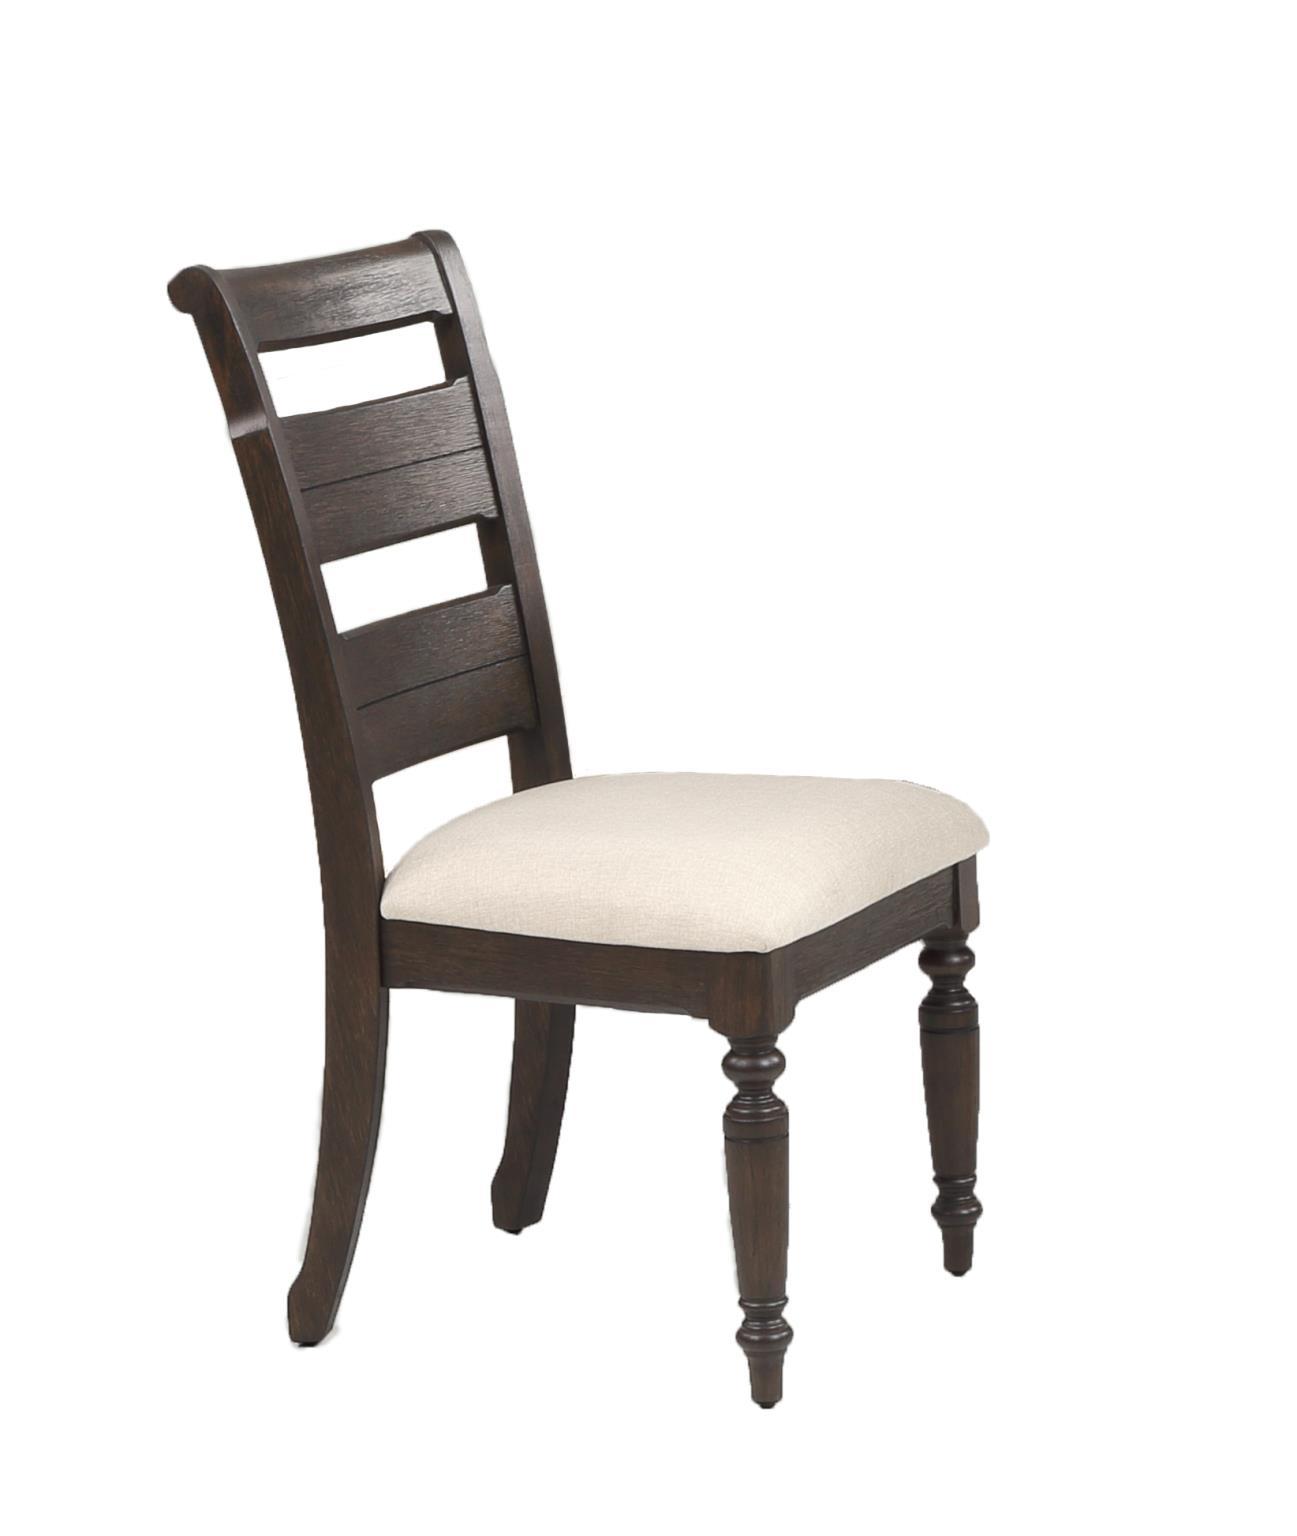 Transitional, Farmhouse Dining Chair Set BELLAMY 5910-510 5910-510 in Elm Fabric